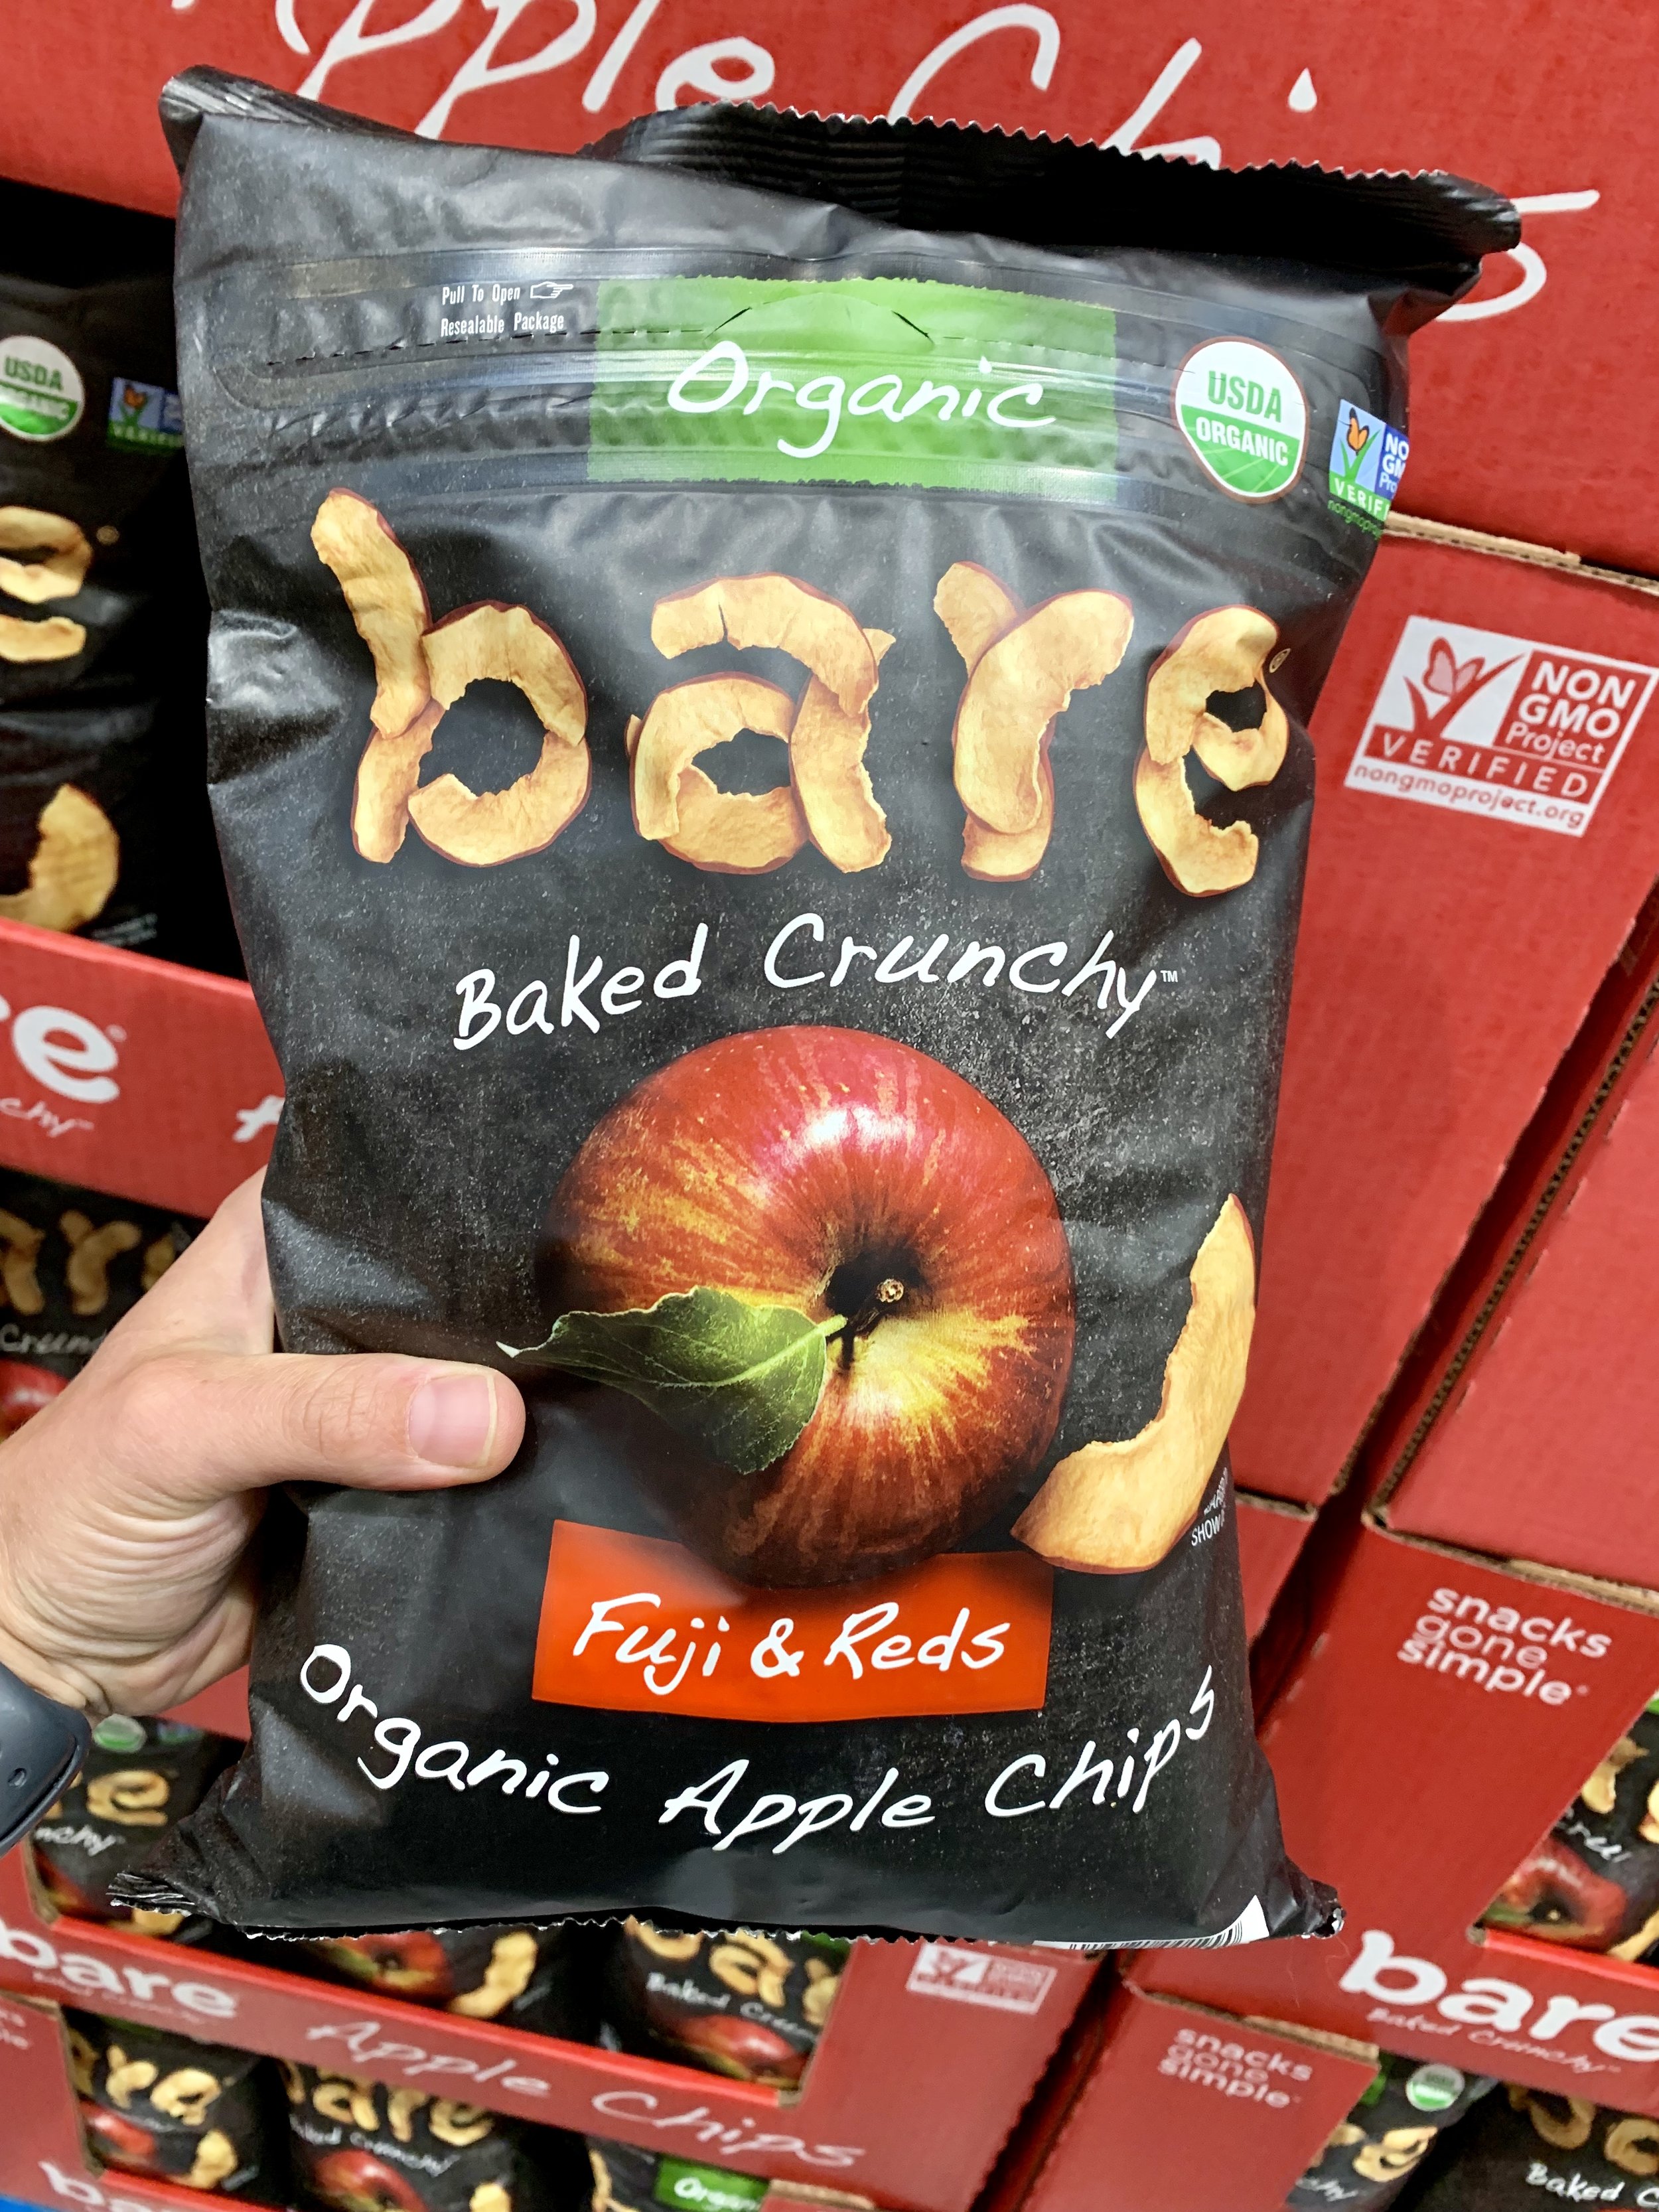  Bare Organic Apple Chips, Cinnamon, Gluten Free + Baked, Multi  Serve Bag, 3 Oz,Pack of 1